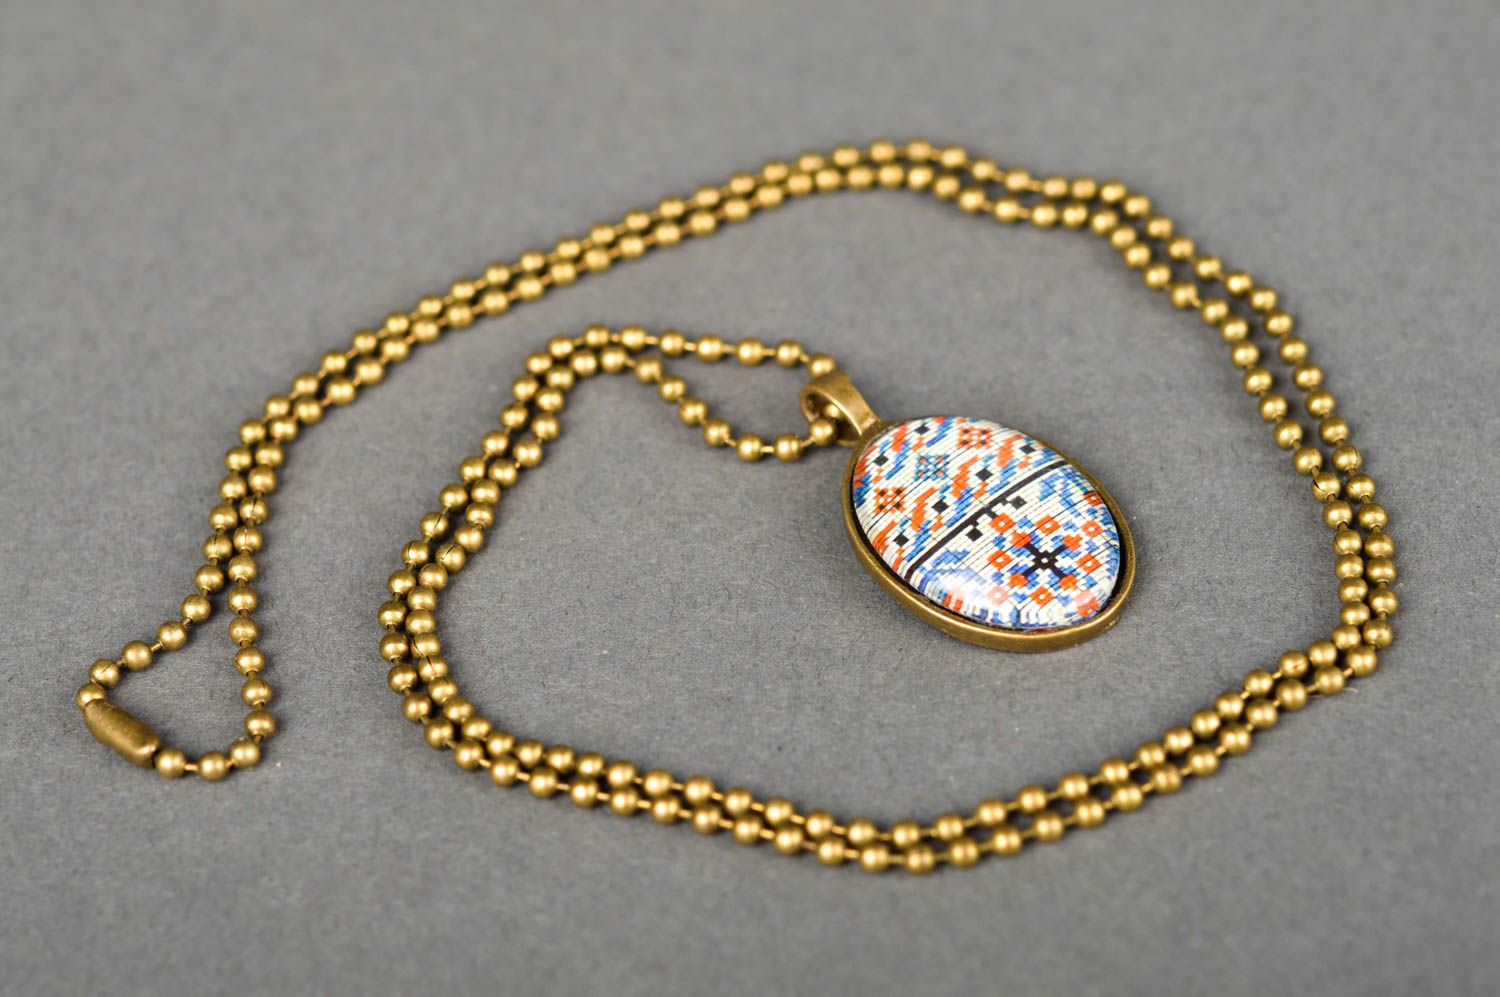 Handmade female pendant stylish metal pendant designer jewelry in ethnic style photo 2